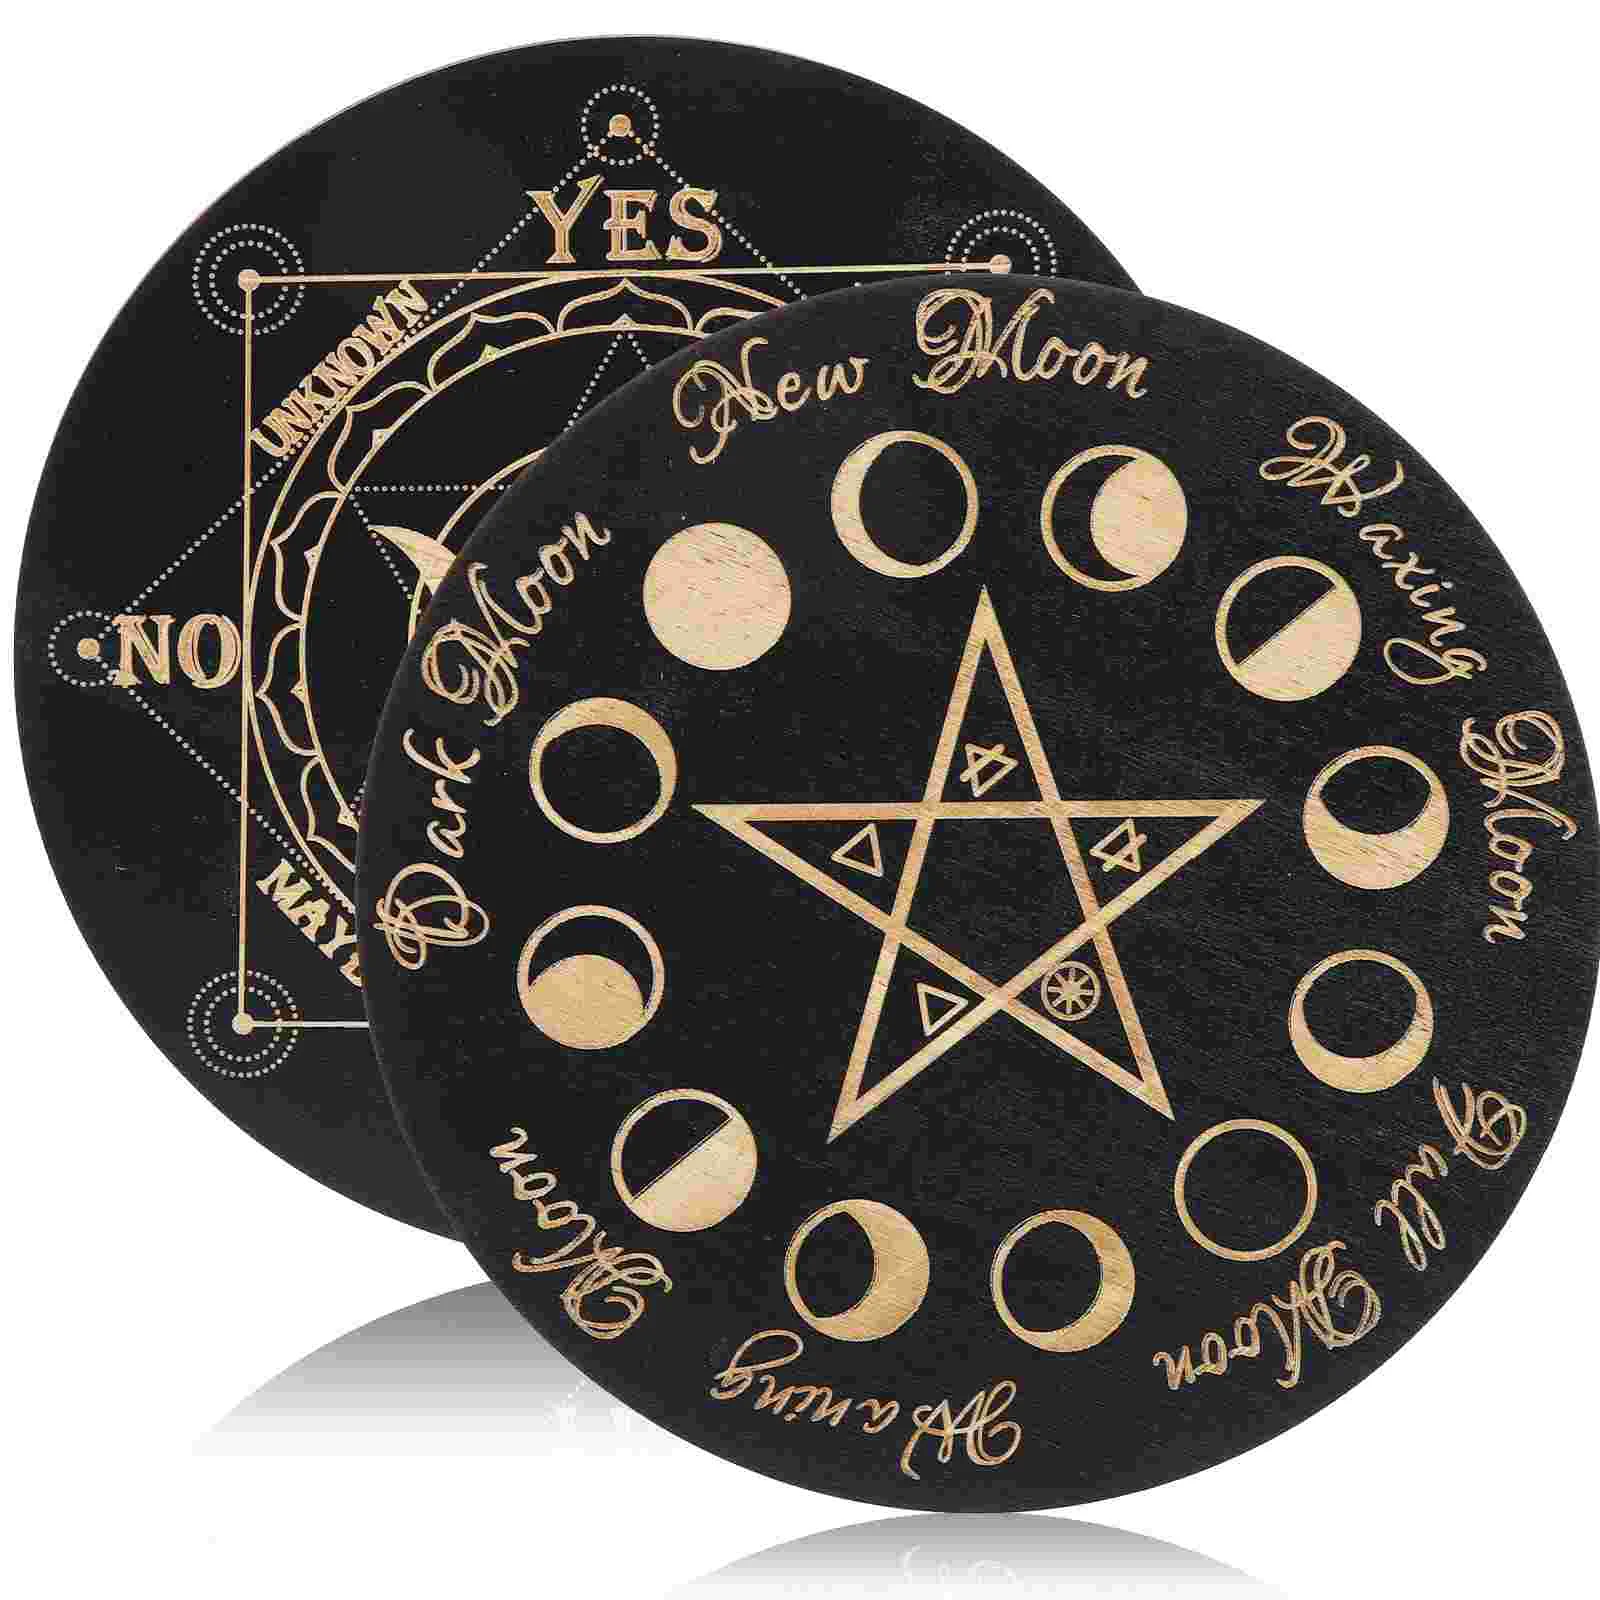 

2 Pcs Wooden Tarot Cards Divination Pendulum Board Decor Altar Accessory Crystals Props Supplies Message